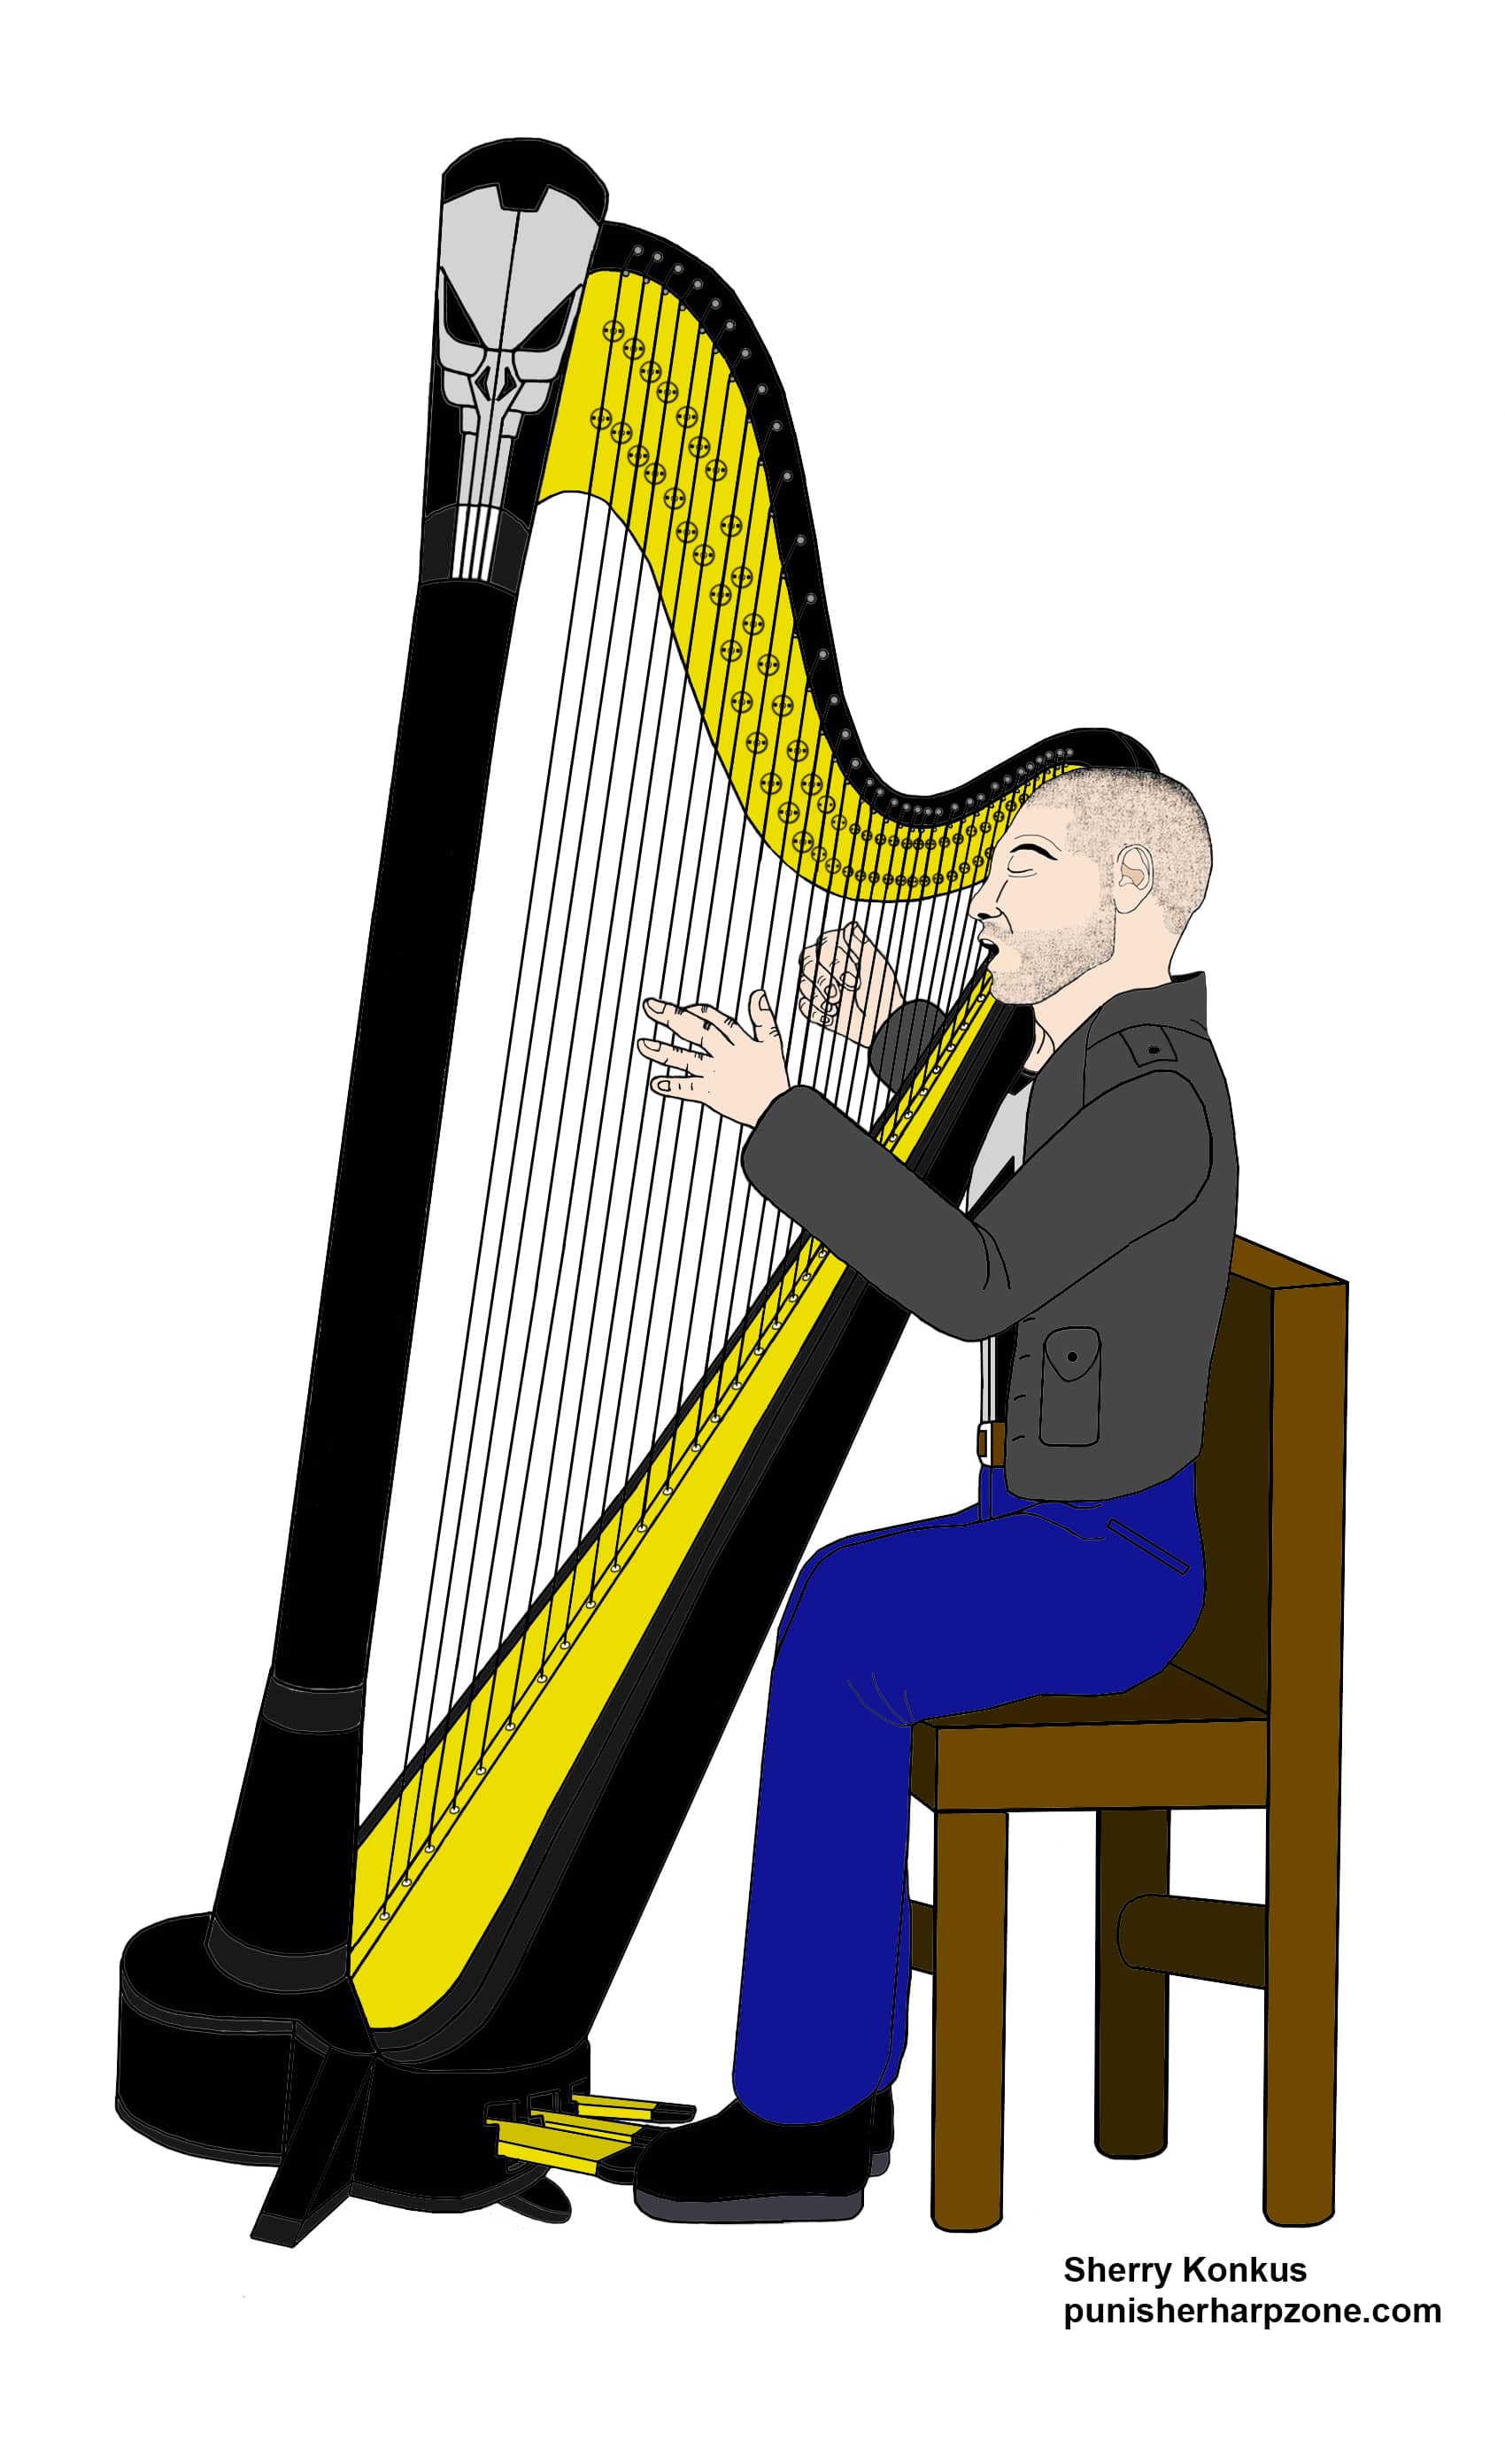 NEW PUNISHER HARP ART: Jon Bernthal's Punisher Sings and Harps